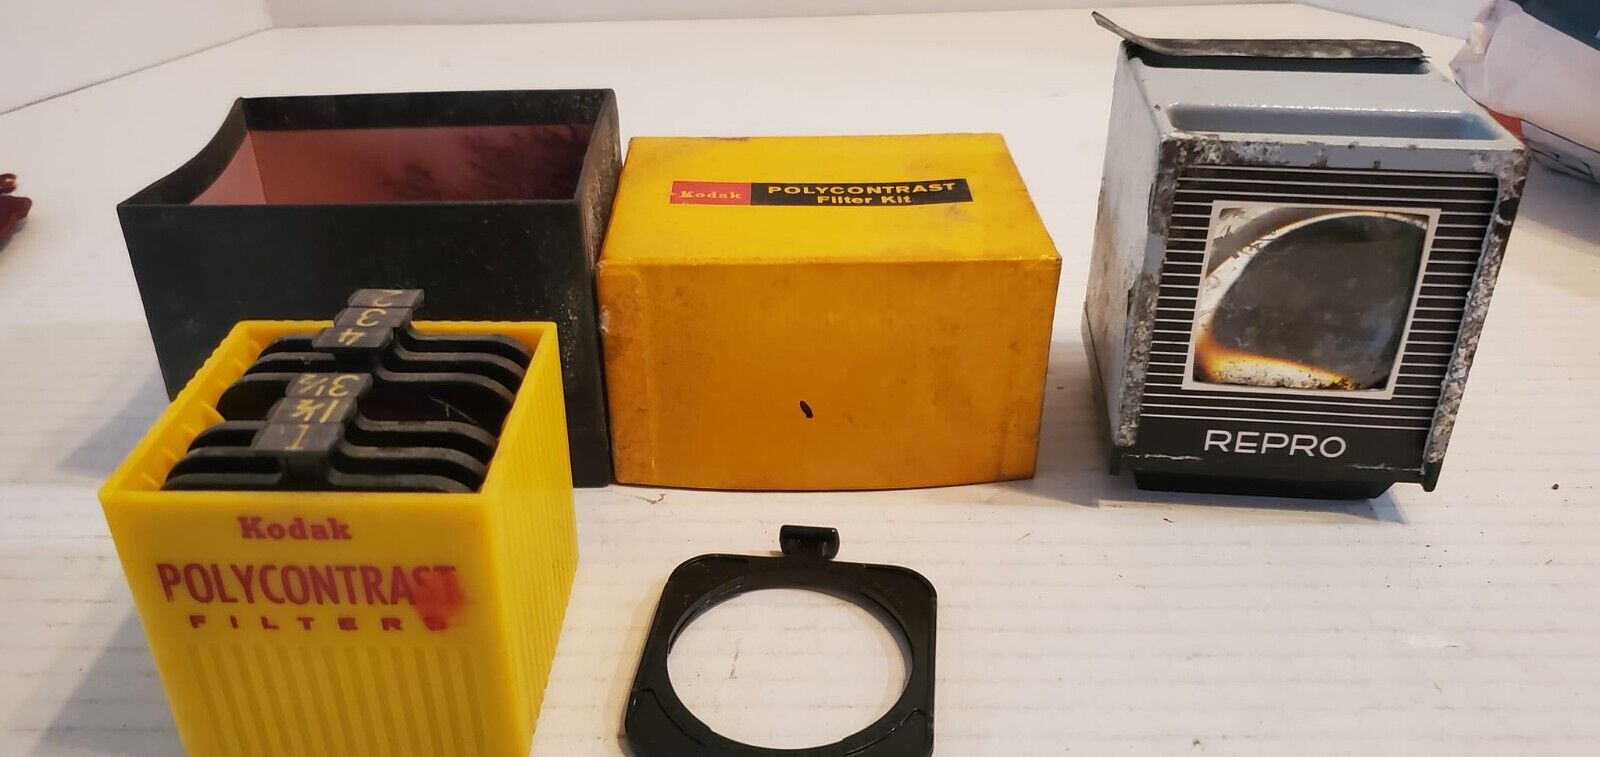 Kodak Polycontrast Filter Kit - Durst M 300 24 X 36mm Repro Enlarger Head